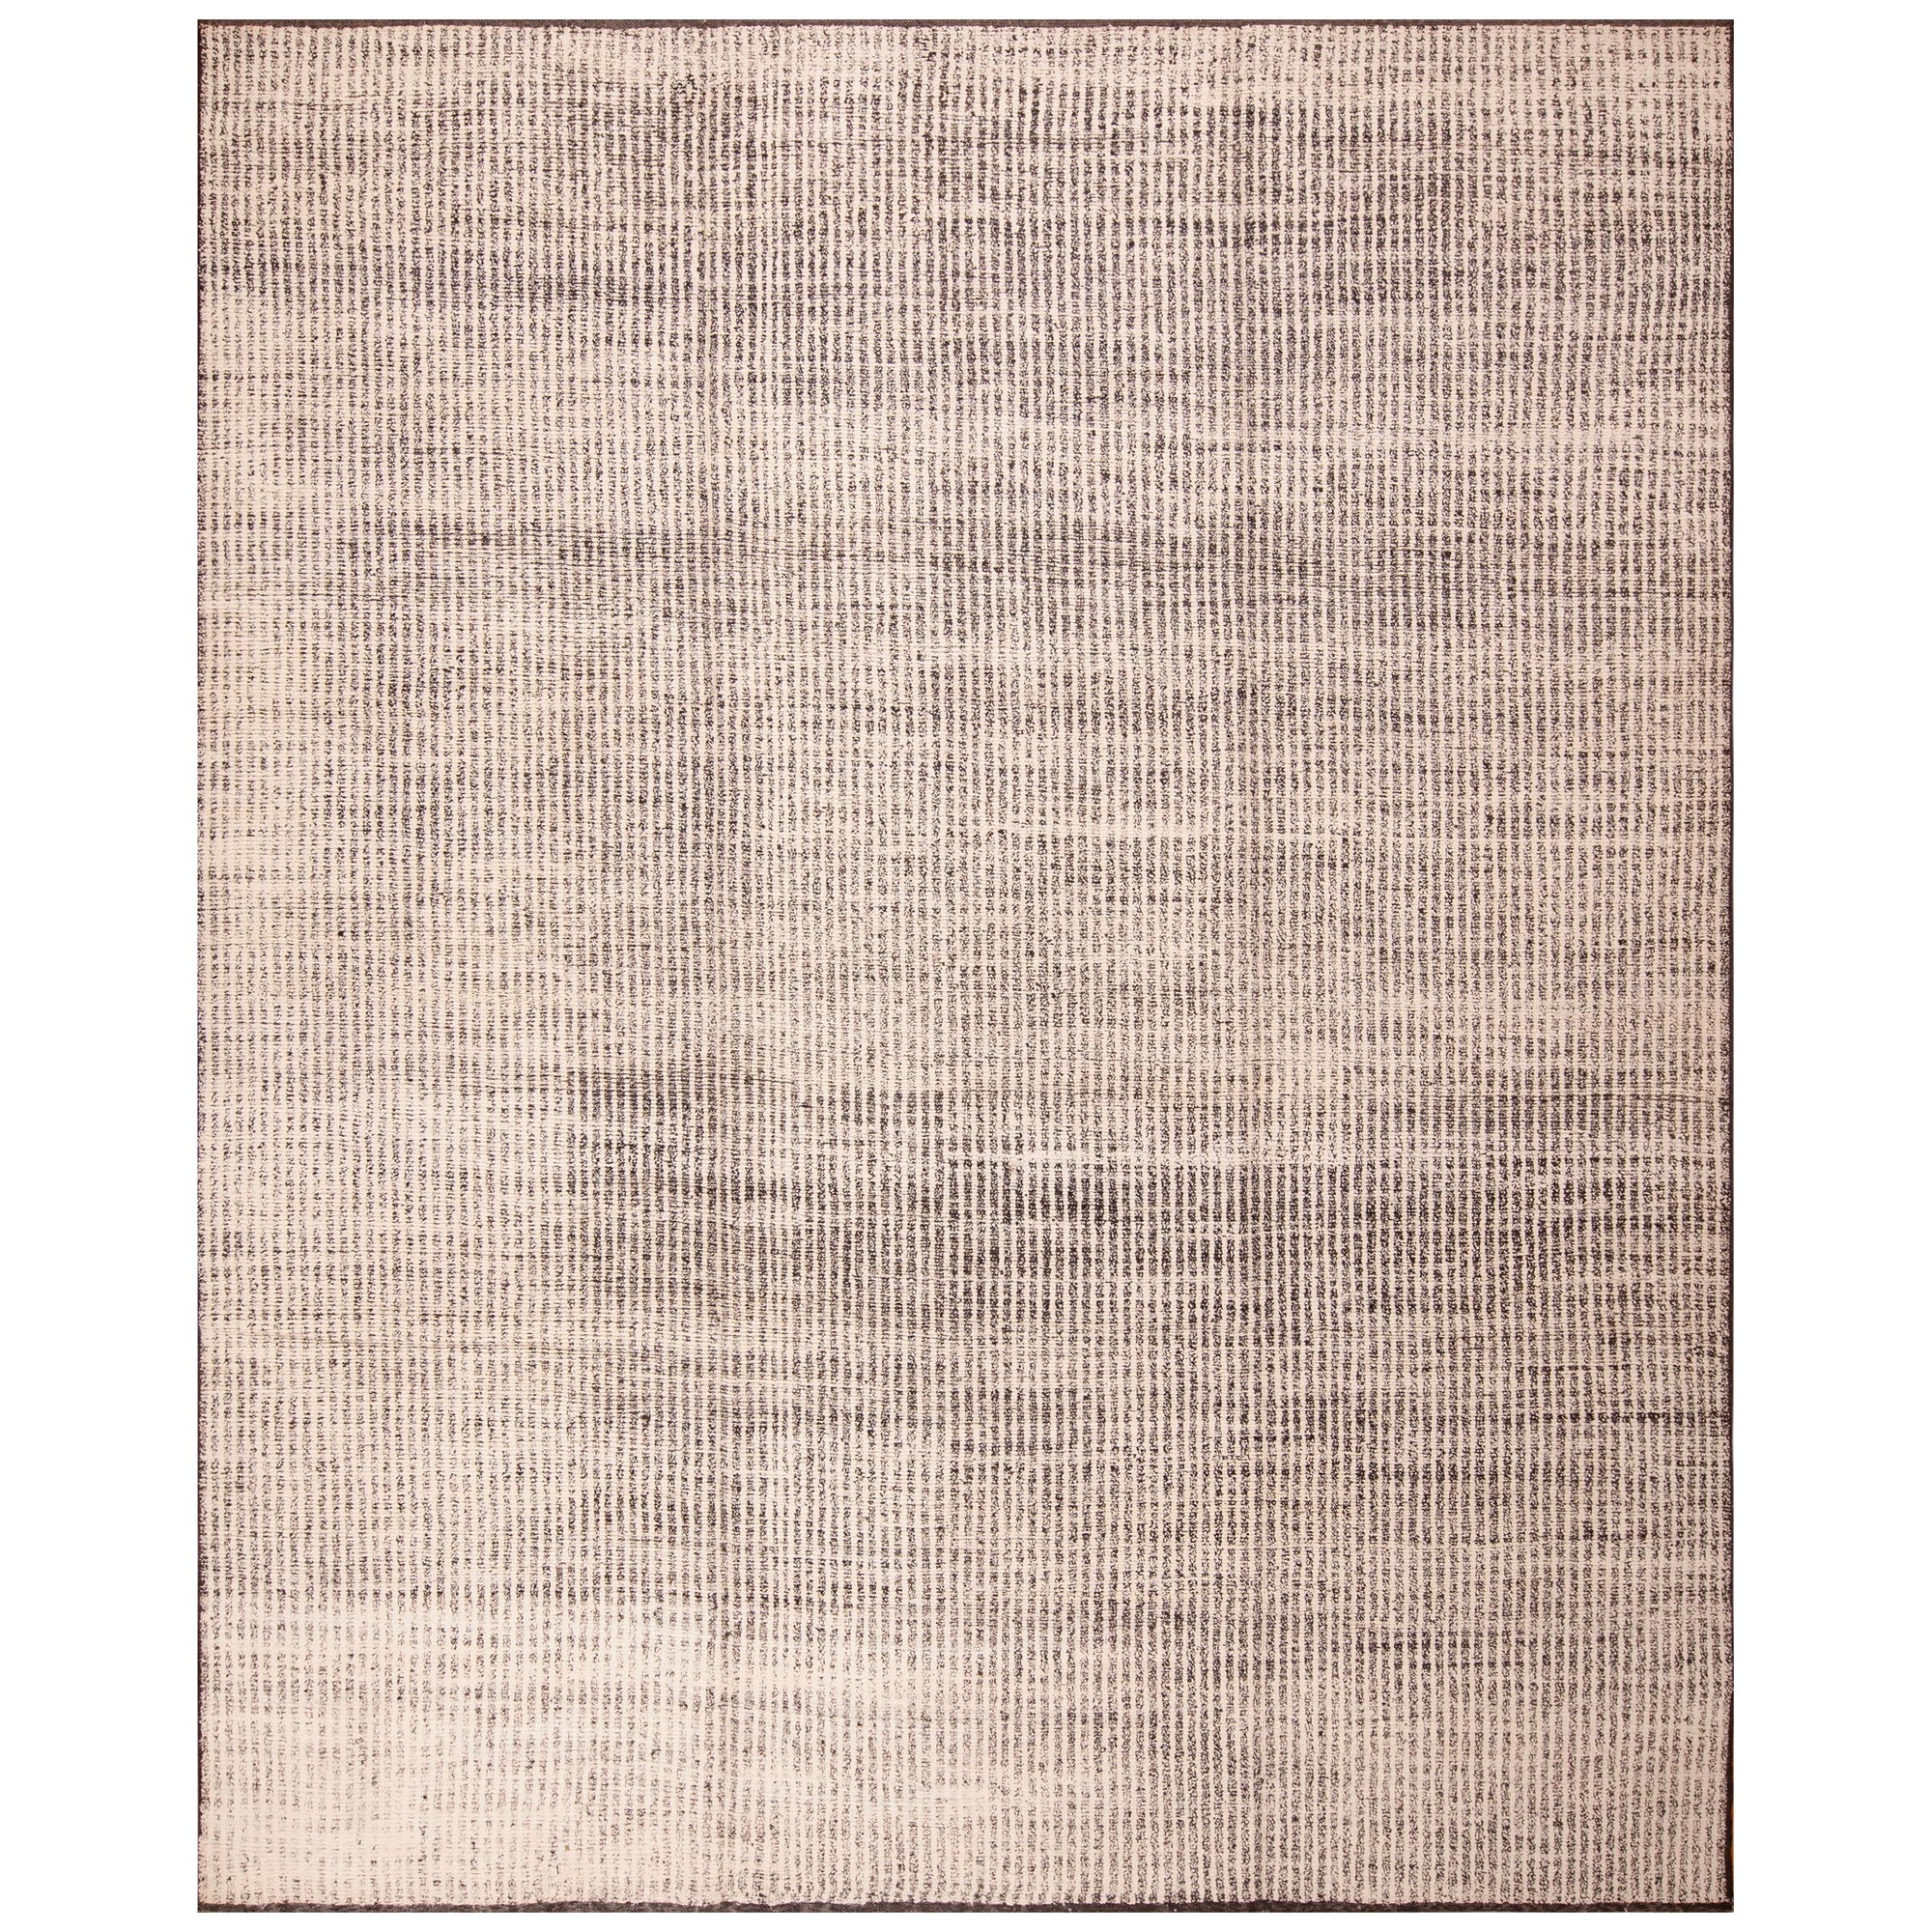 Collection Nazmiyal, motif géométrique à rayures, tapis moderne 9'9" x 11'10"